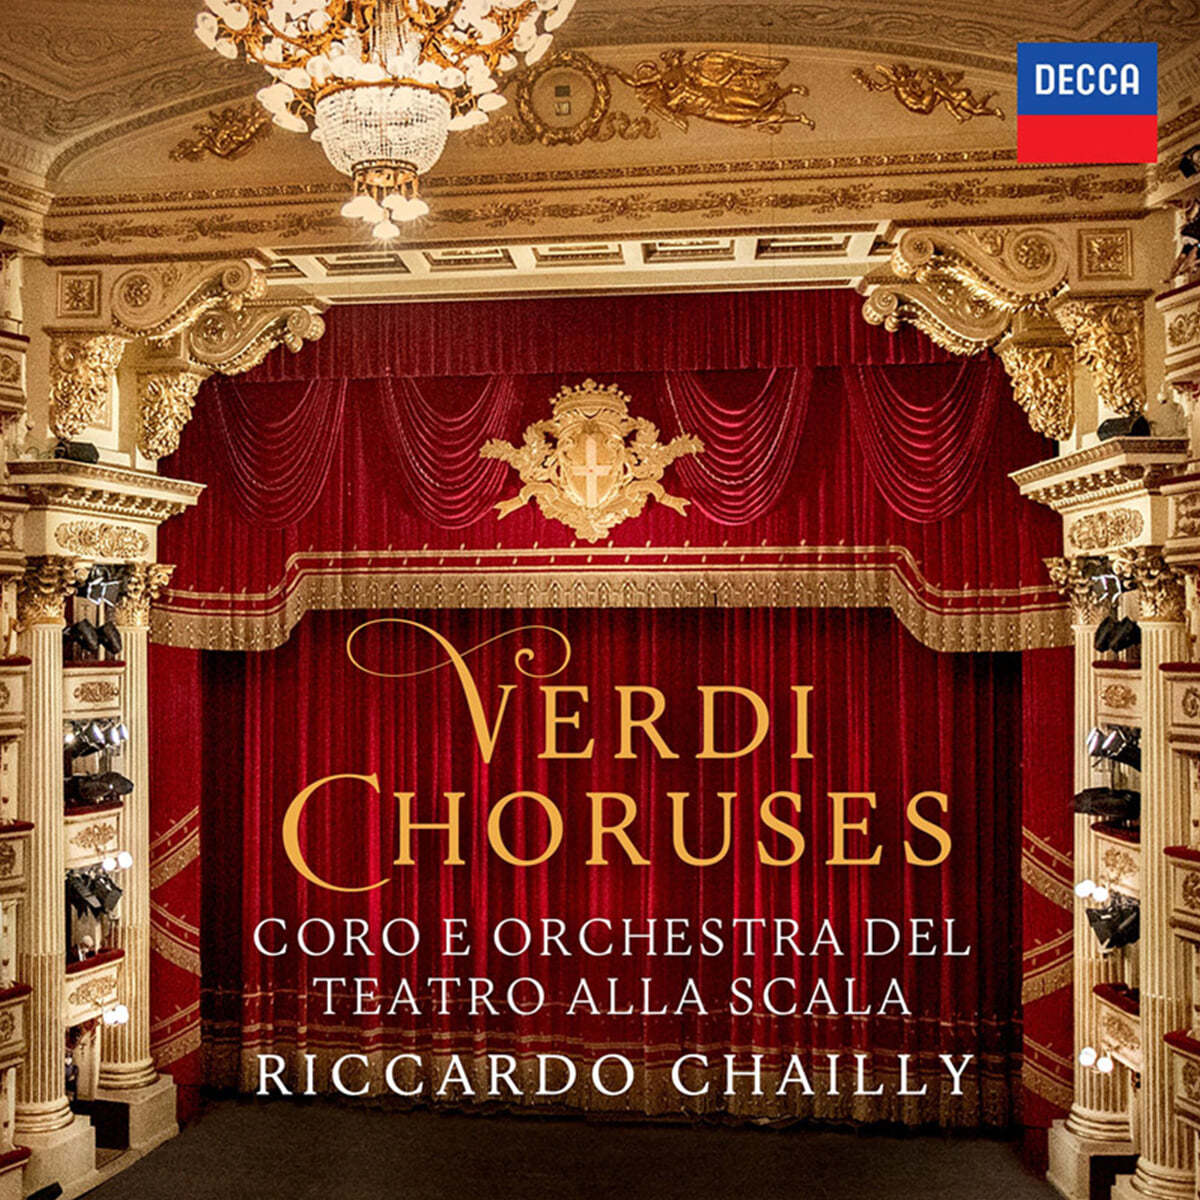 Riccardo Chailly 베르디 오페라 합창음악 모음집 (Verdi Choruses)